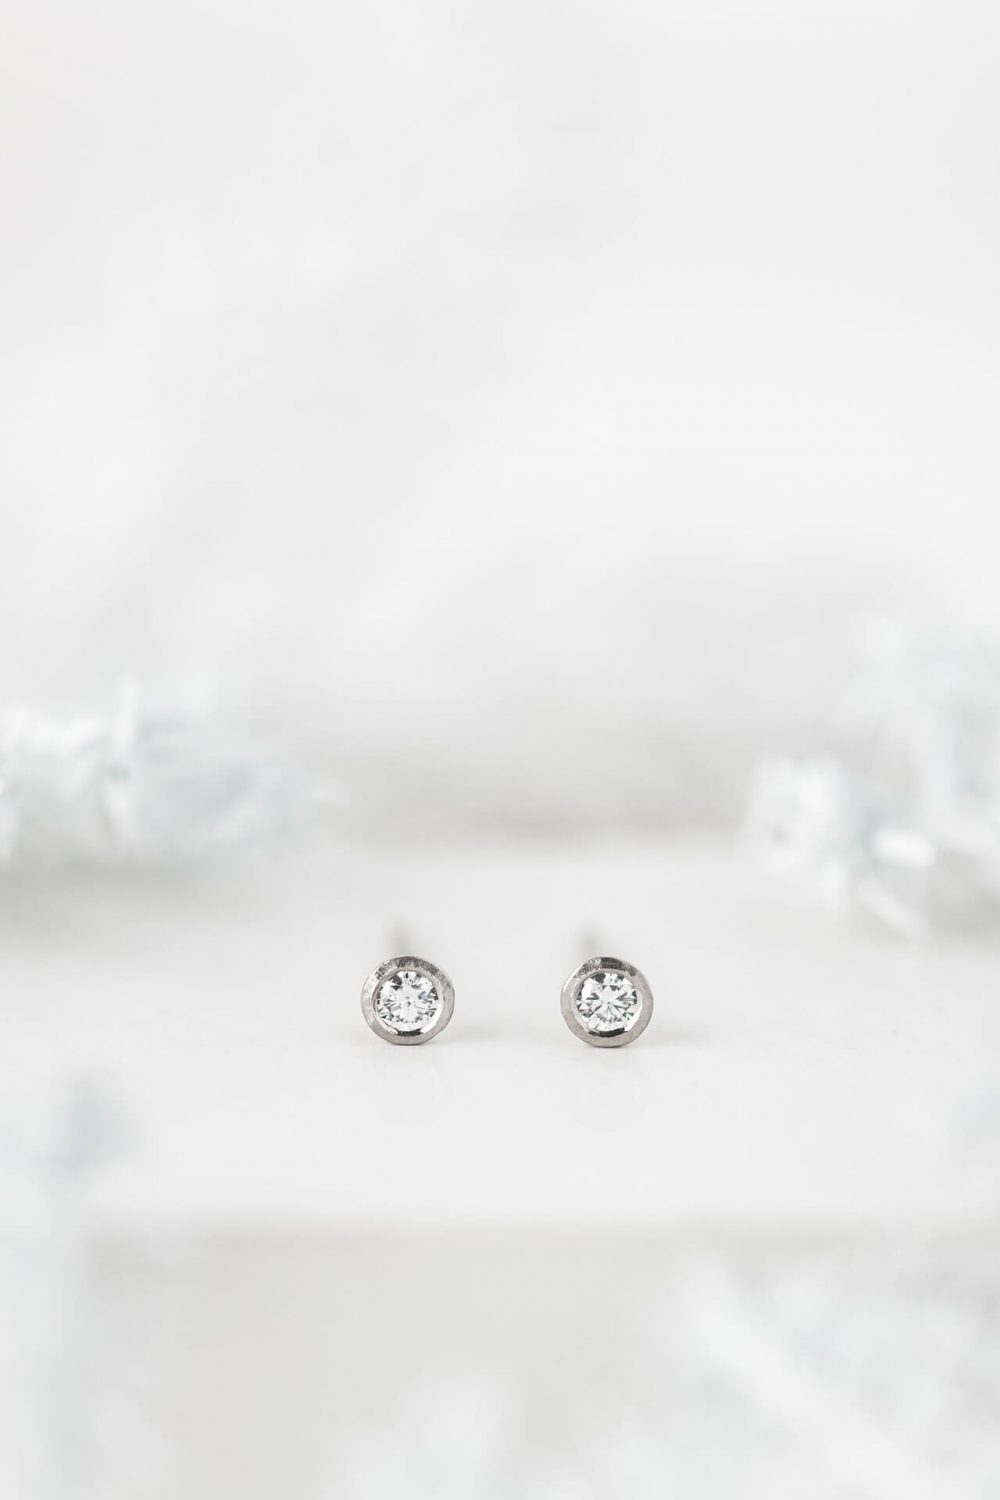 White Gold Diamond Stud Earrings By Uk Jewellery Designer Jacks Turner.